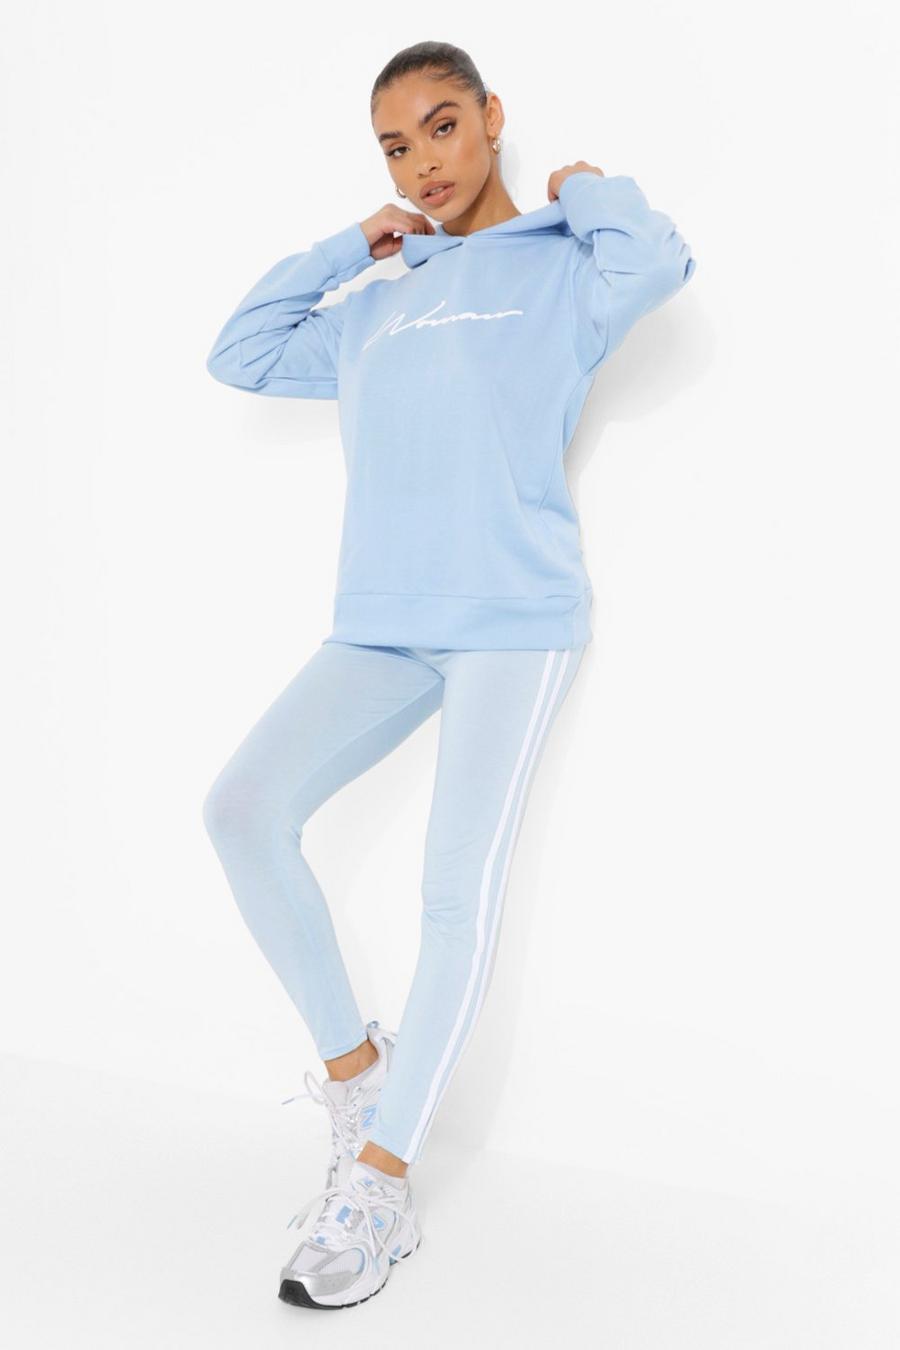 https://media.boohoo.com/i/boohoo/fzz15368_blue_xl/female-blue-woman-hoodie-and-legging-set/?w=900&qlt=default&fmt.jp2.qlt=70&fmt=auto&sm=fit